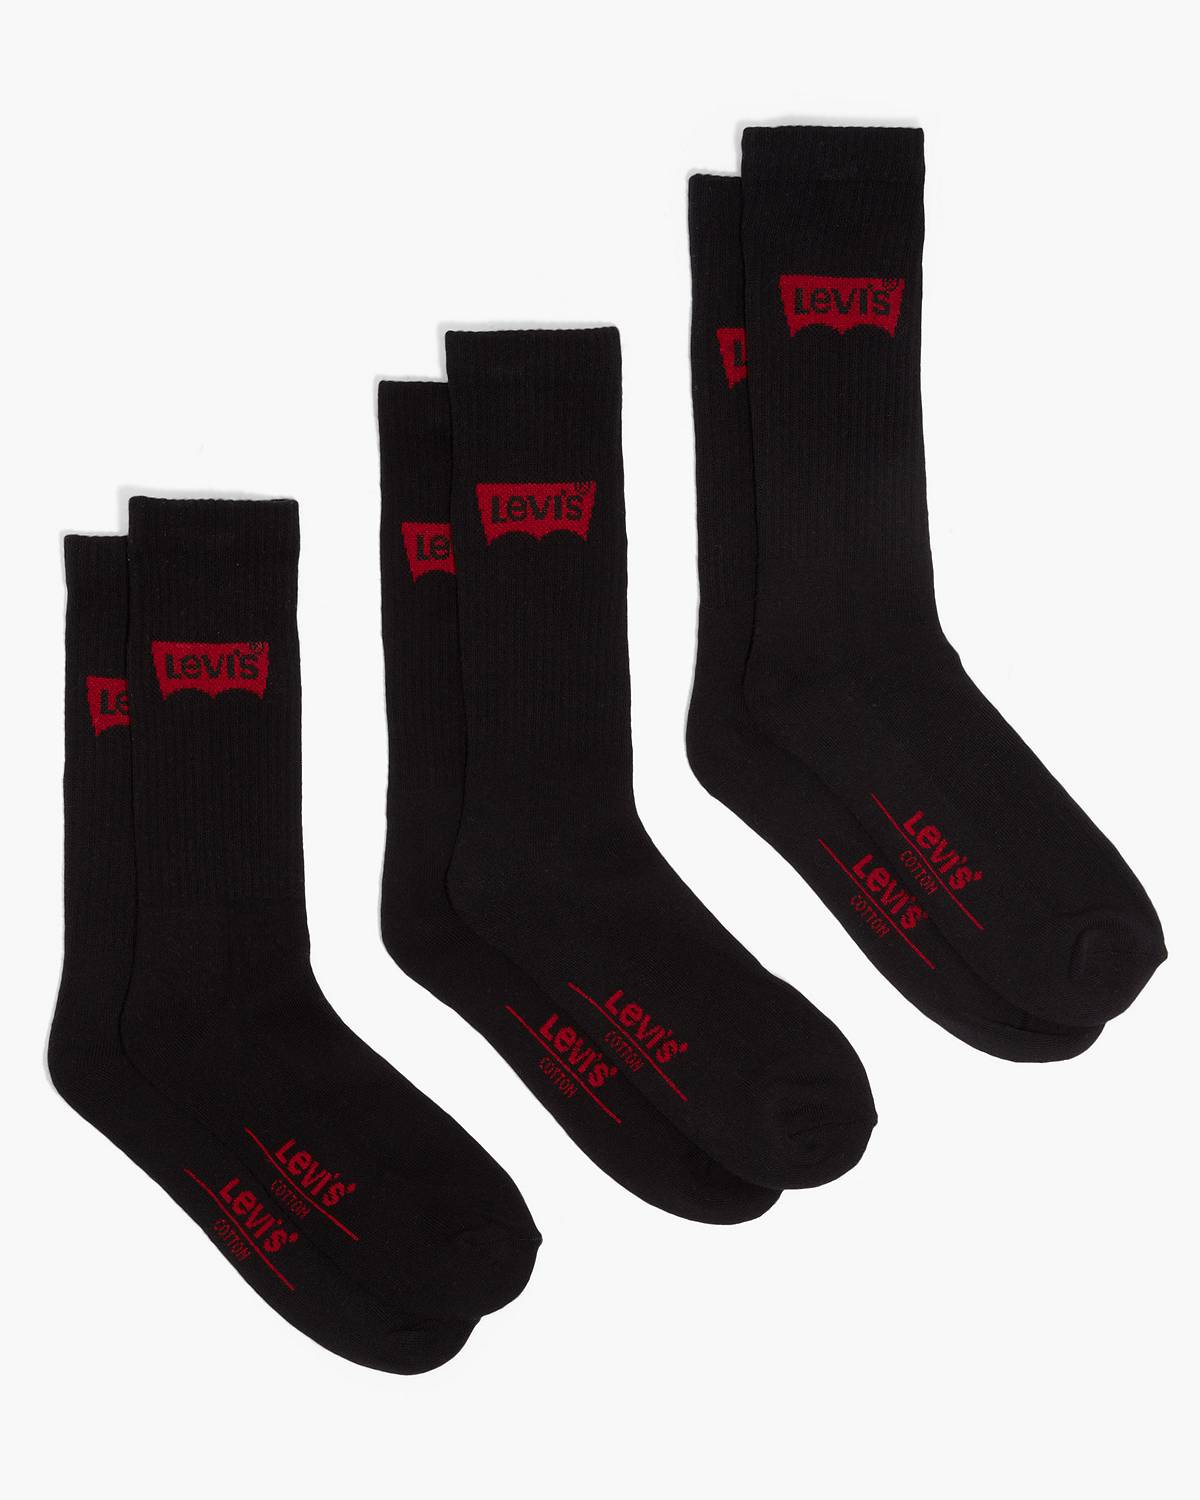 Set of 3 black Levi's socks.